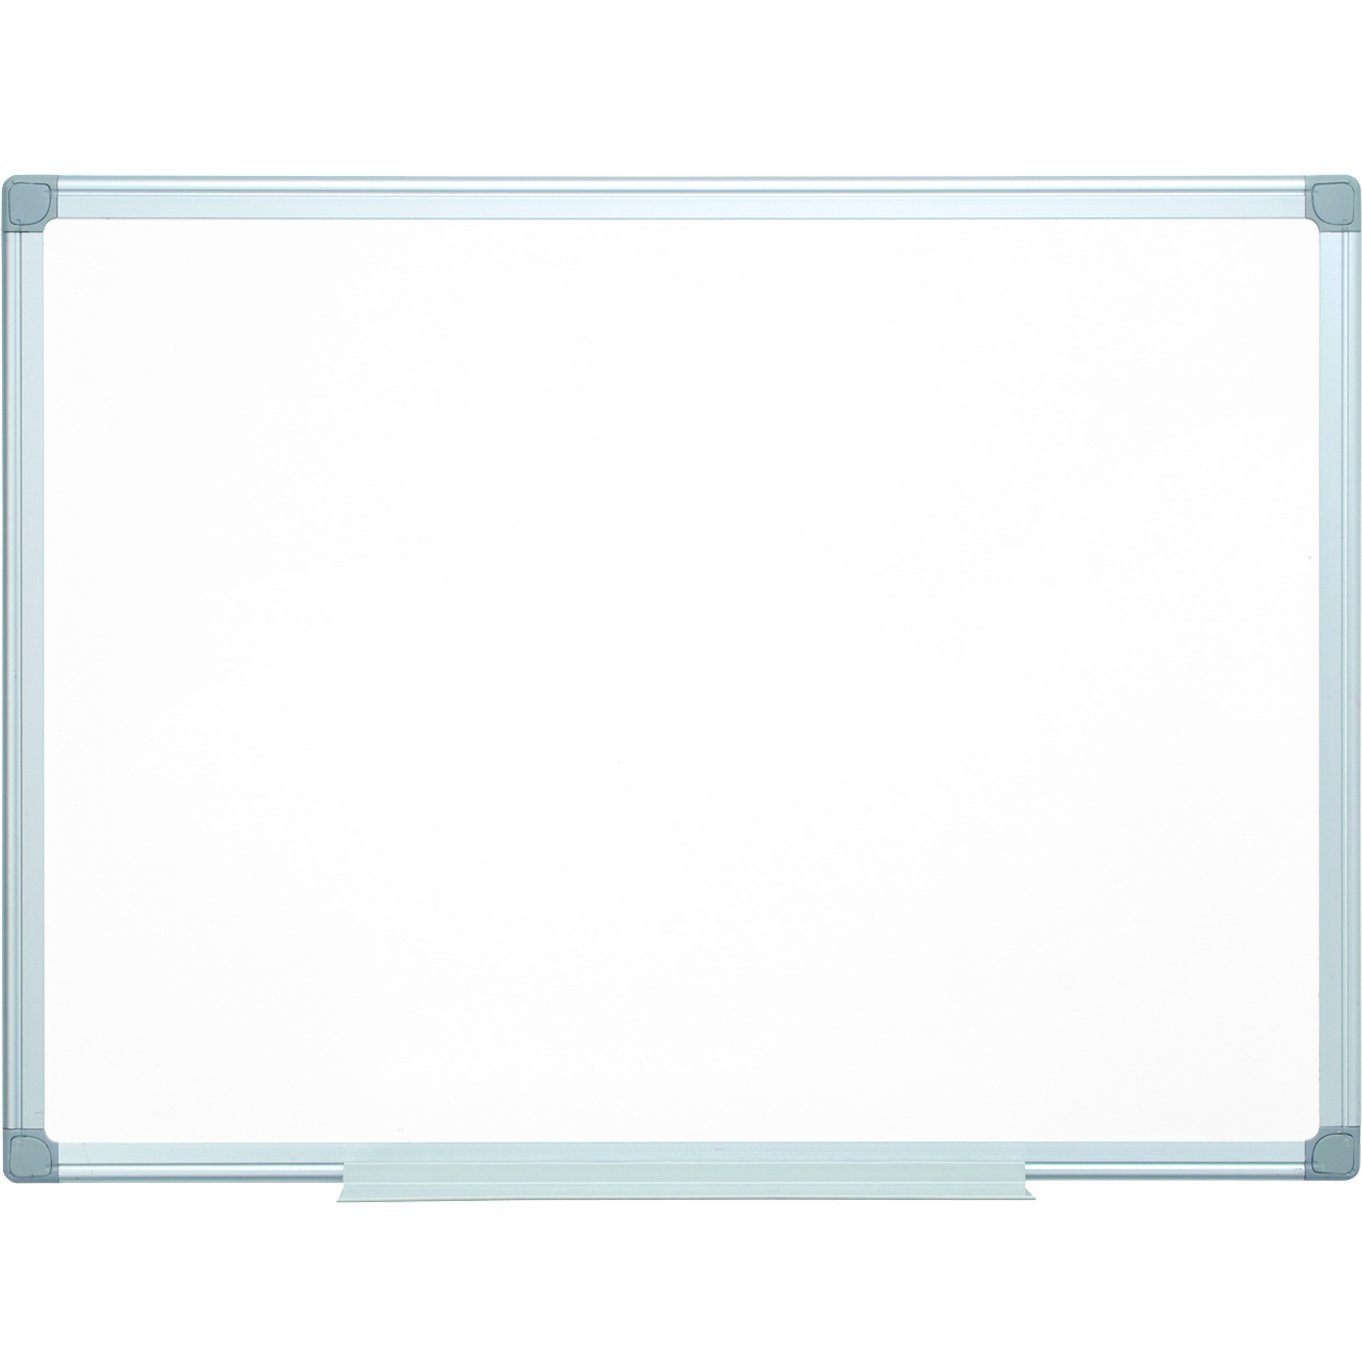 Q-connect lakeret whiteboardtavle 1200 mm x 1800 mm, Stål/Aluminium